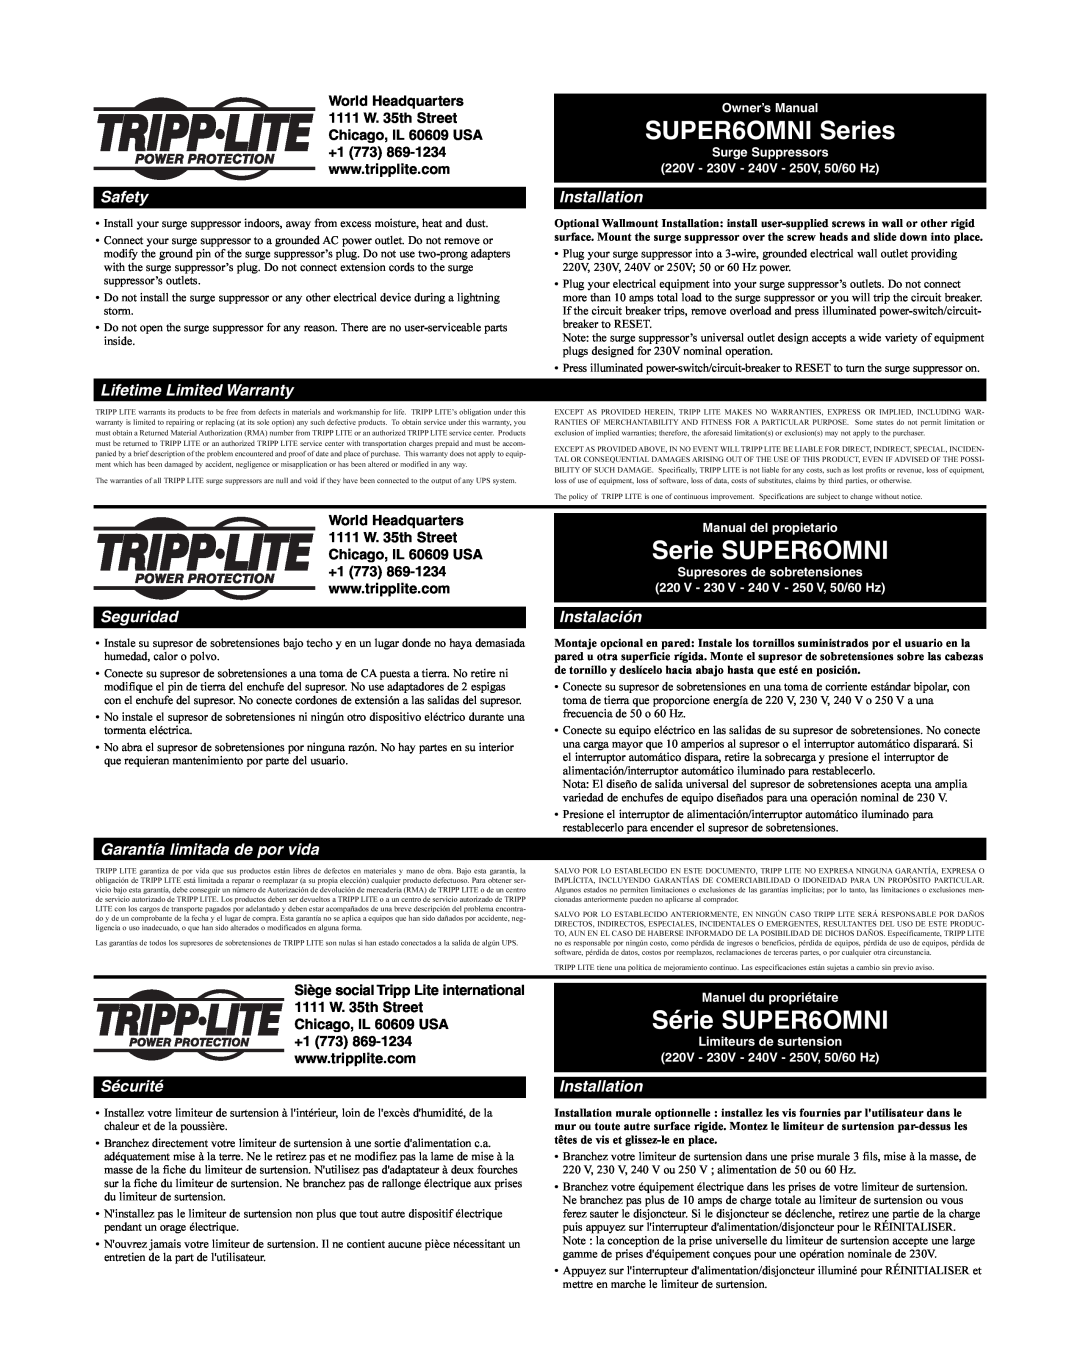 Tripp Lite 93-2234 owner manual SUPER6OMNI Series, Serie SUPER6OMNI, Série SUPER6OMNI, Safety, Lifetime Limited Warranty 